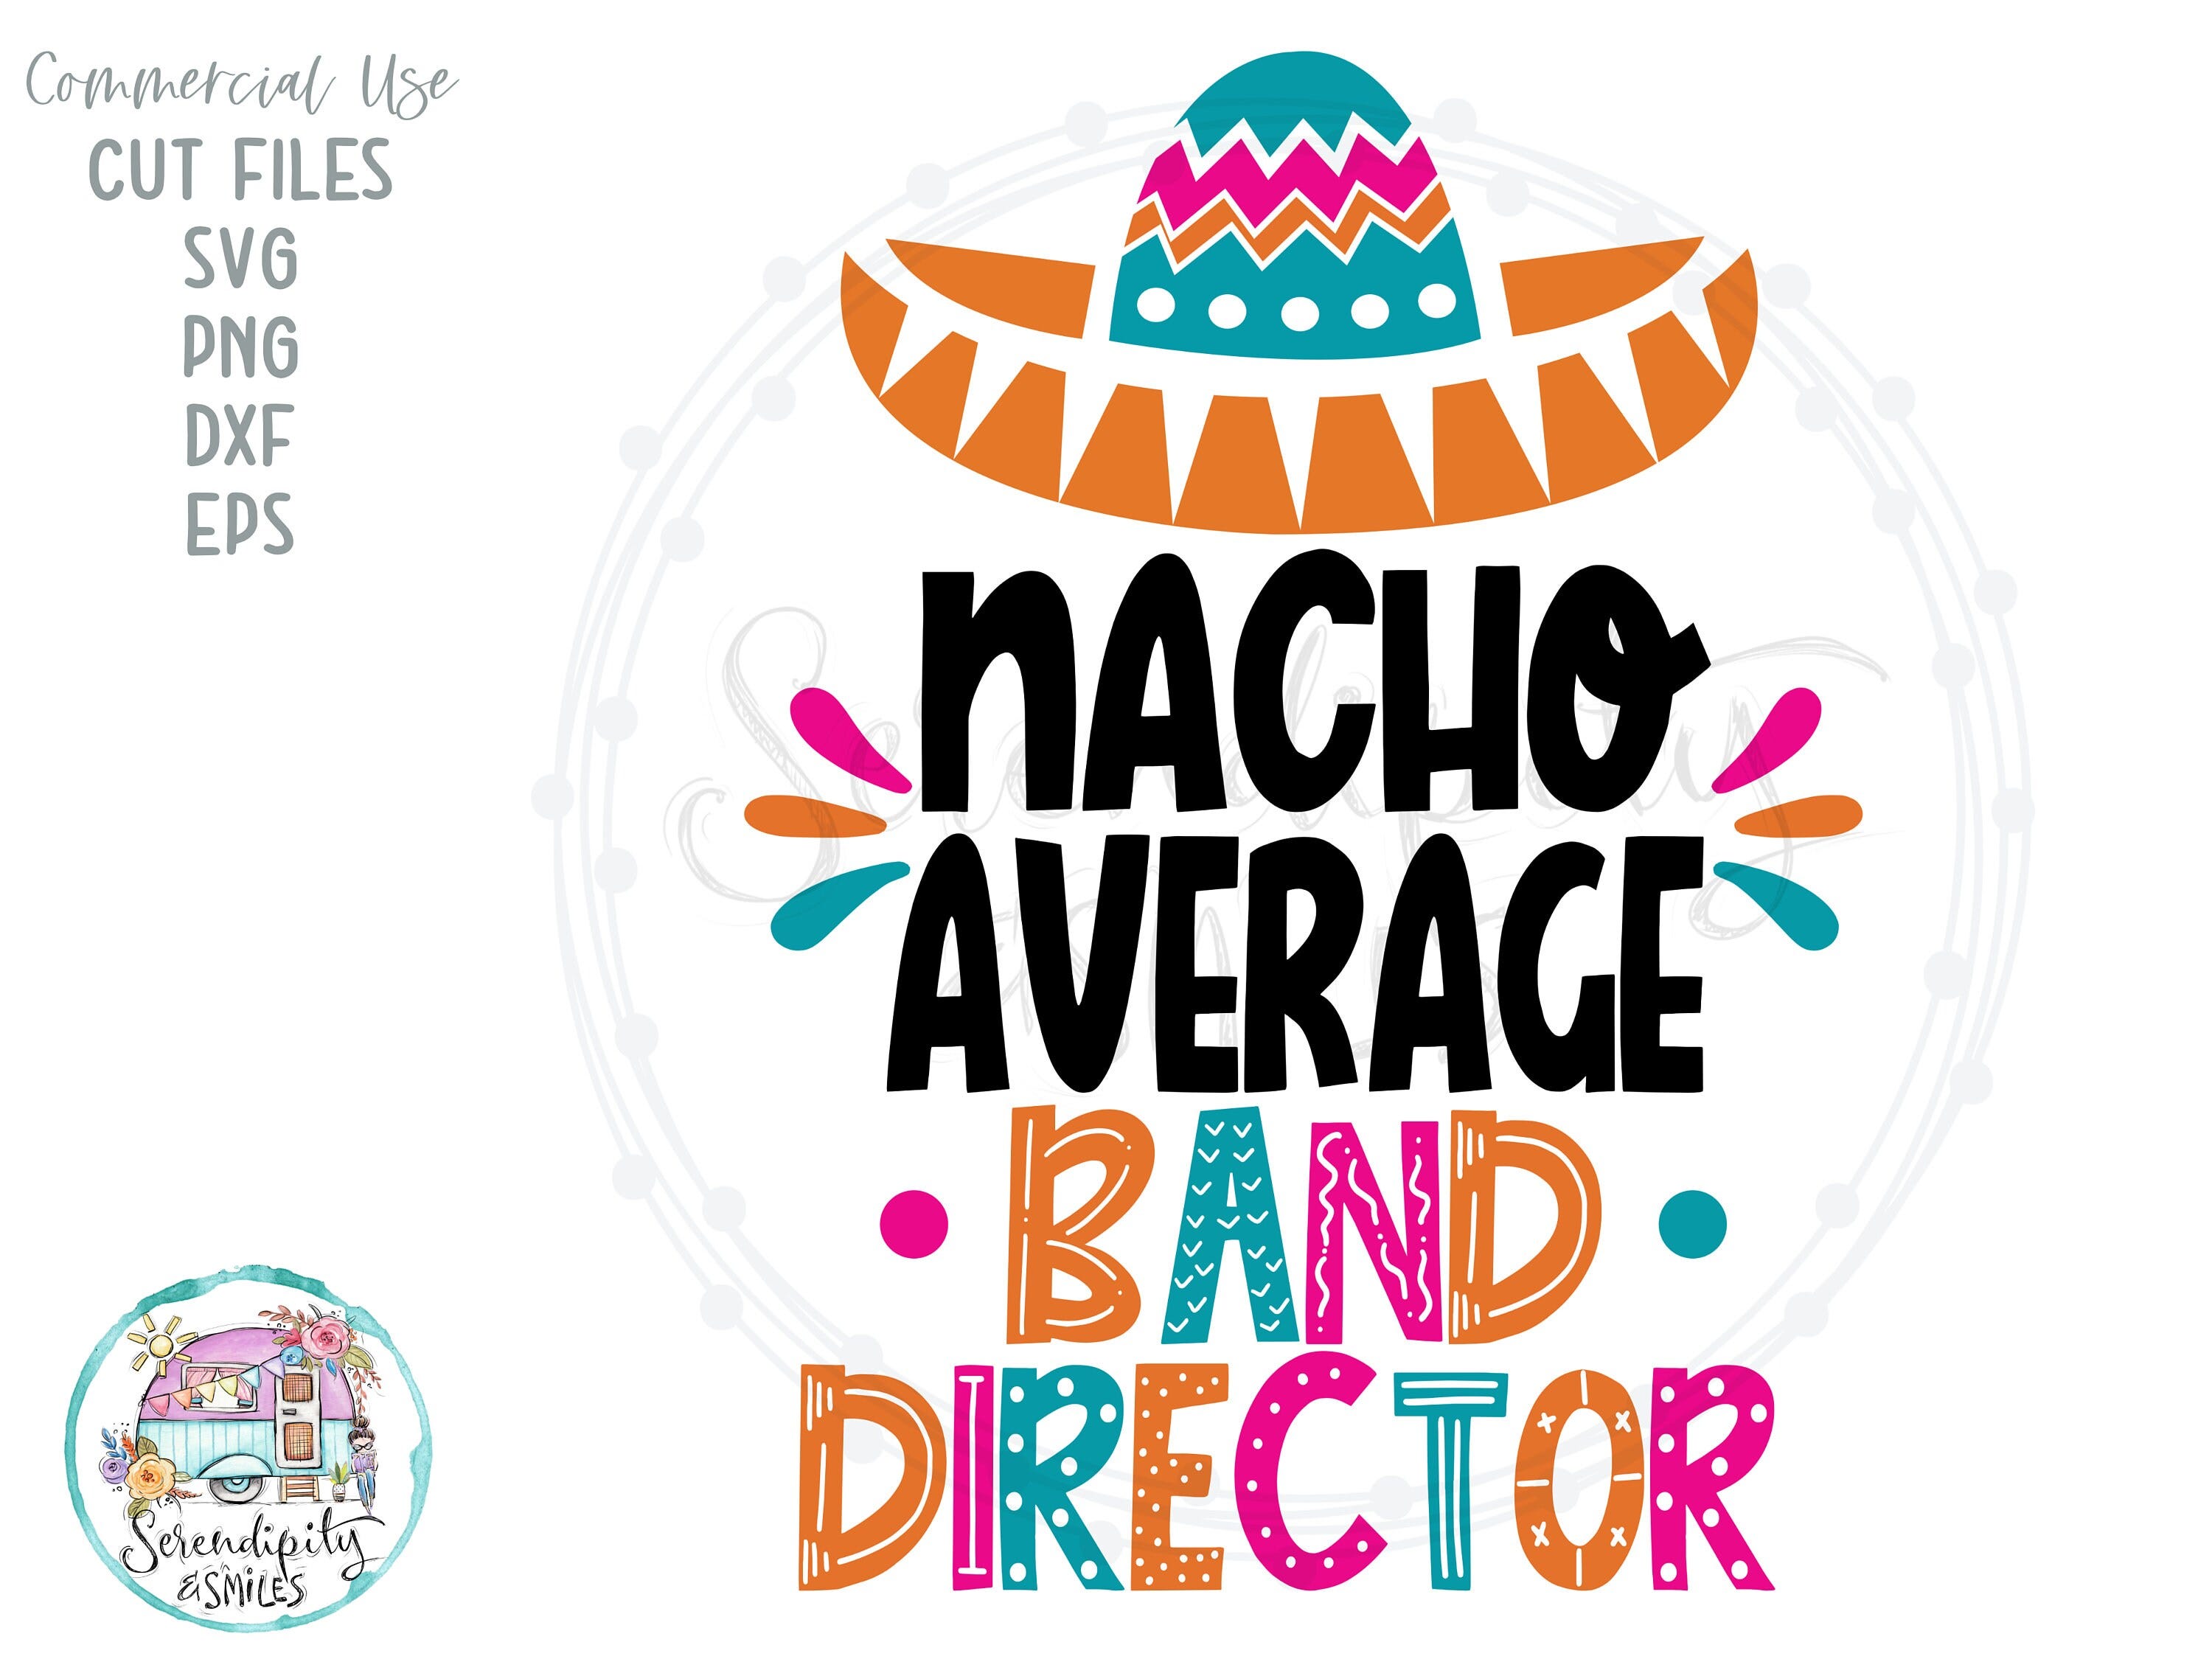 Nacho Average Band Director 2 - svg - png - dfx - eps Files for Cutting Machines Cricut Sublimation - Funny Cinco De Mayo Design